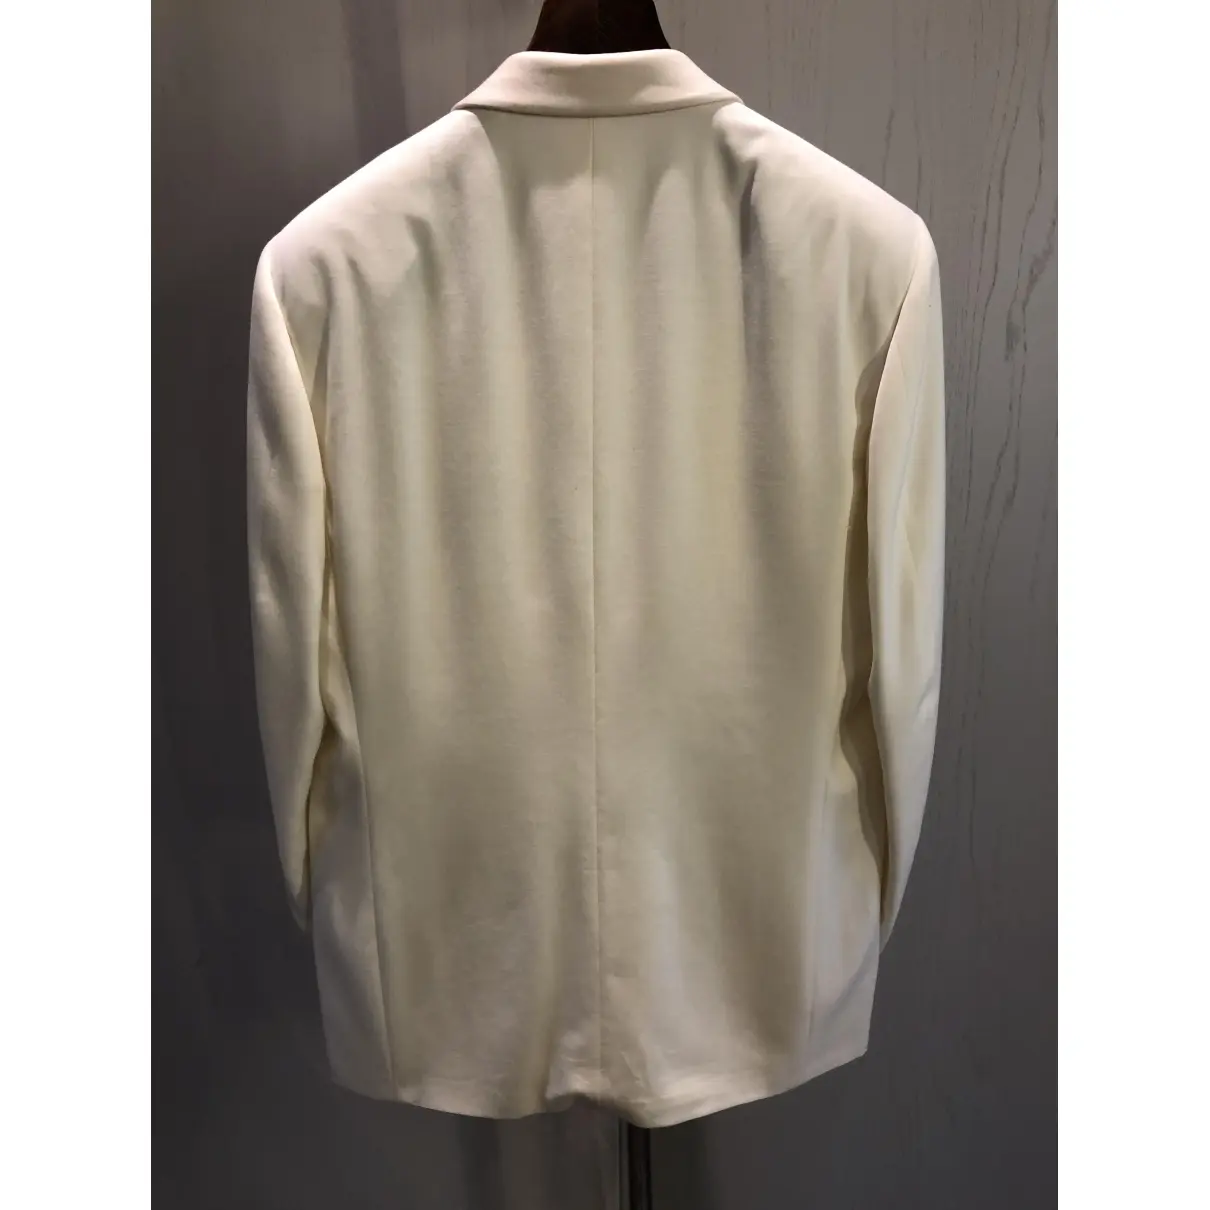 Canali Wool jacket for sale - Vintage